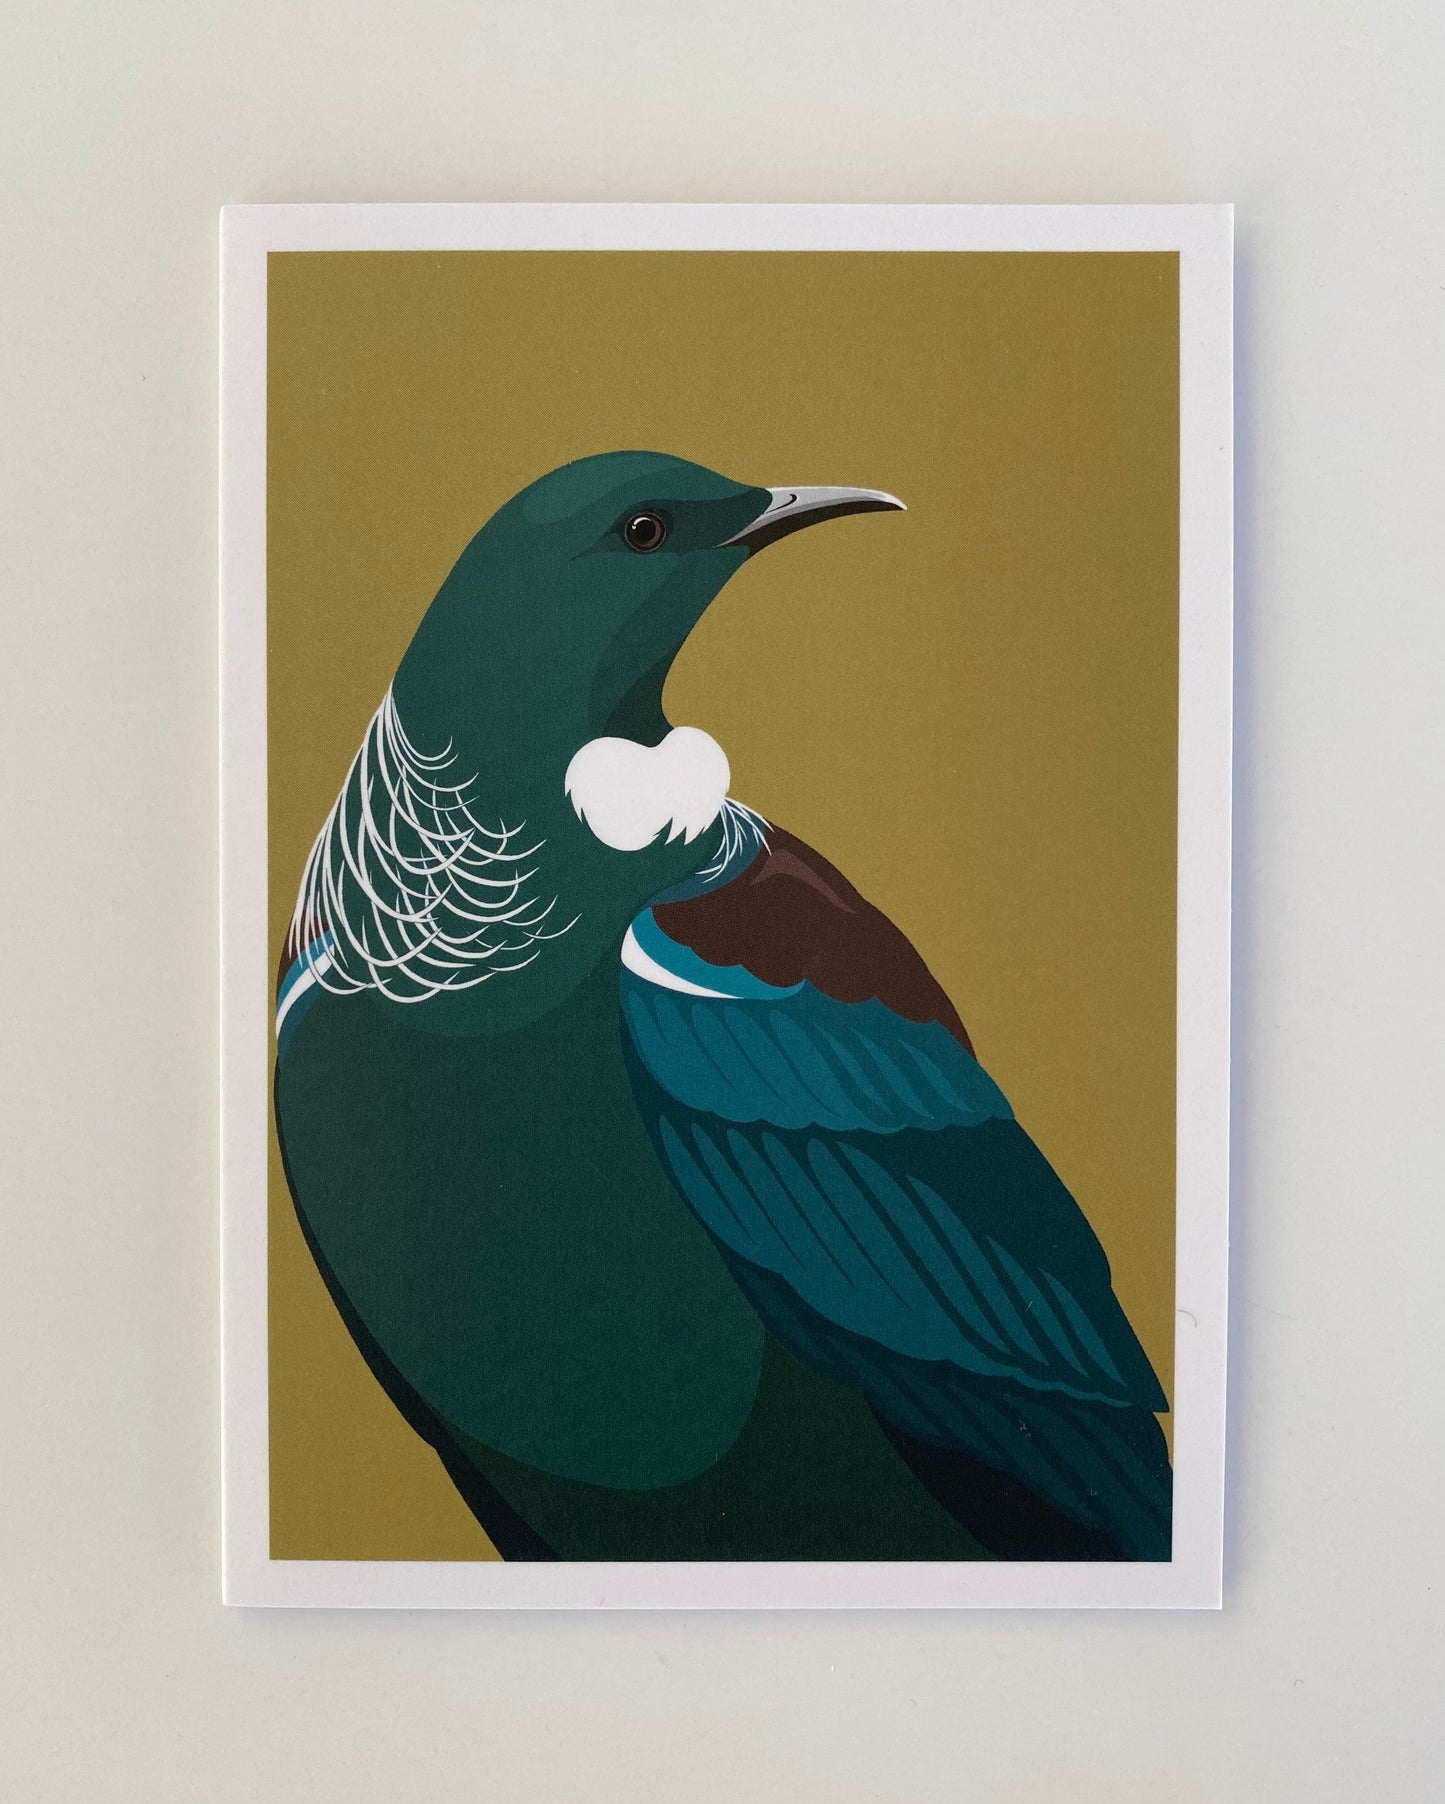 Tui Card art print, by NZ artist Hansby Design